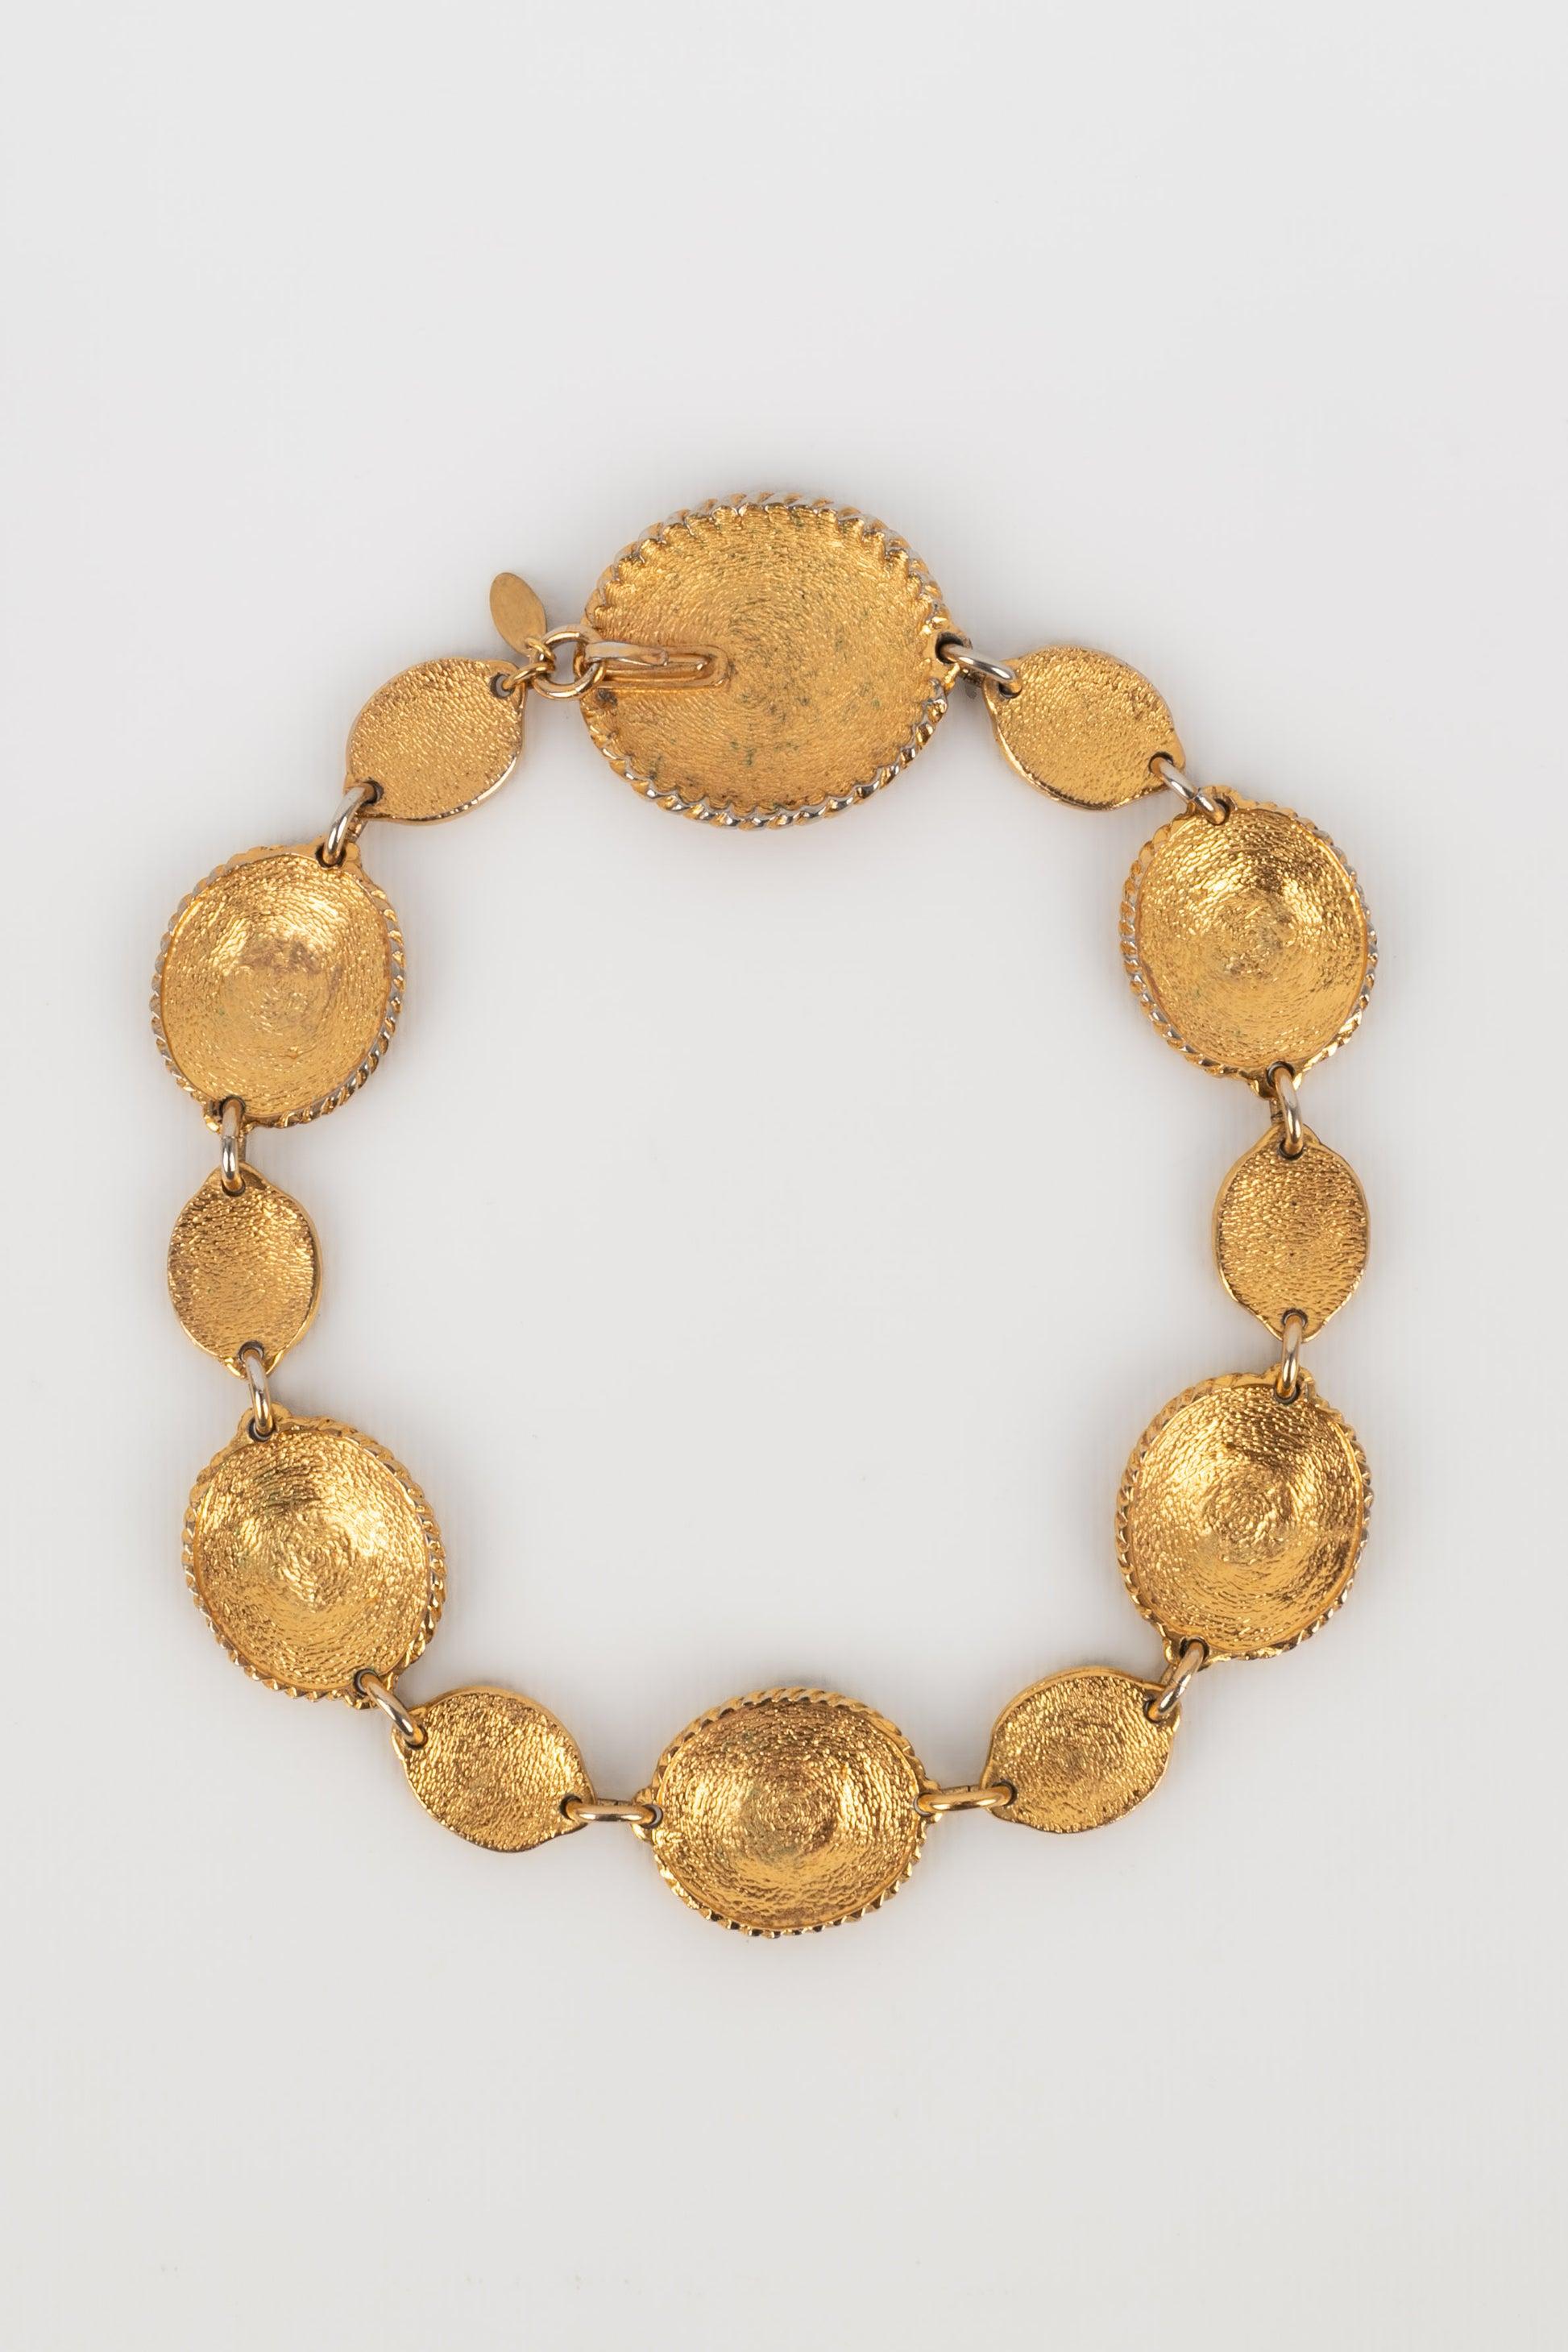 Chanel Golden Short Necklace, 1980s For Sale 2